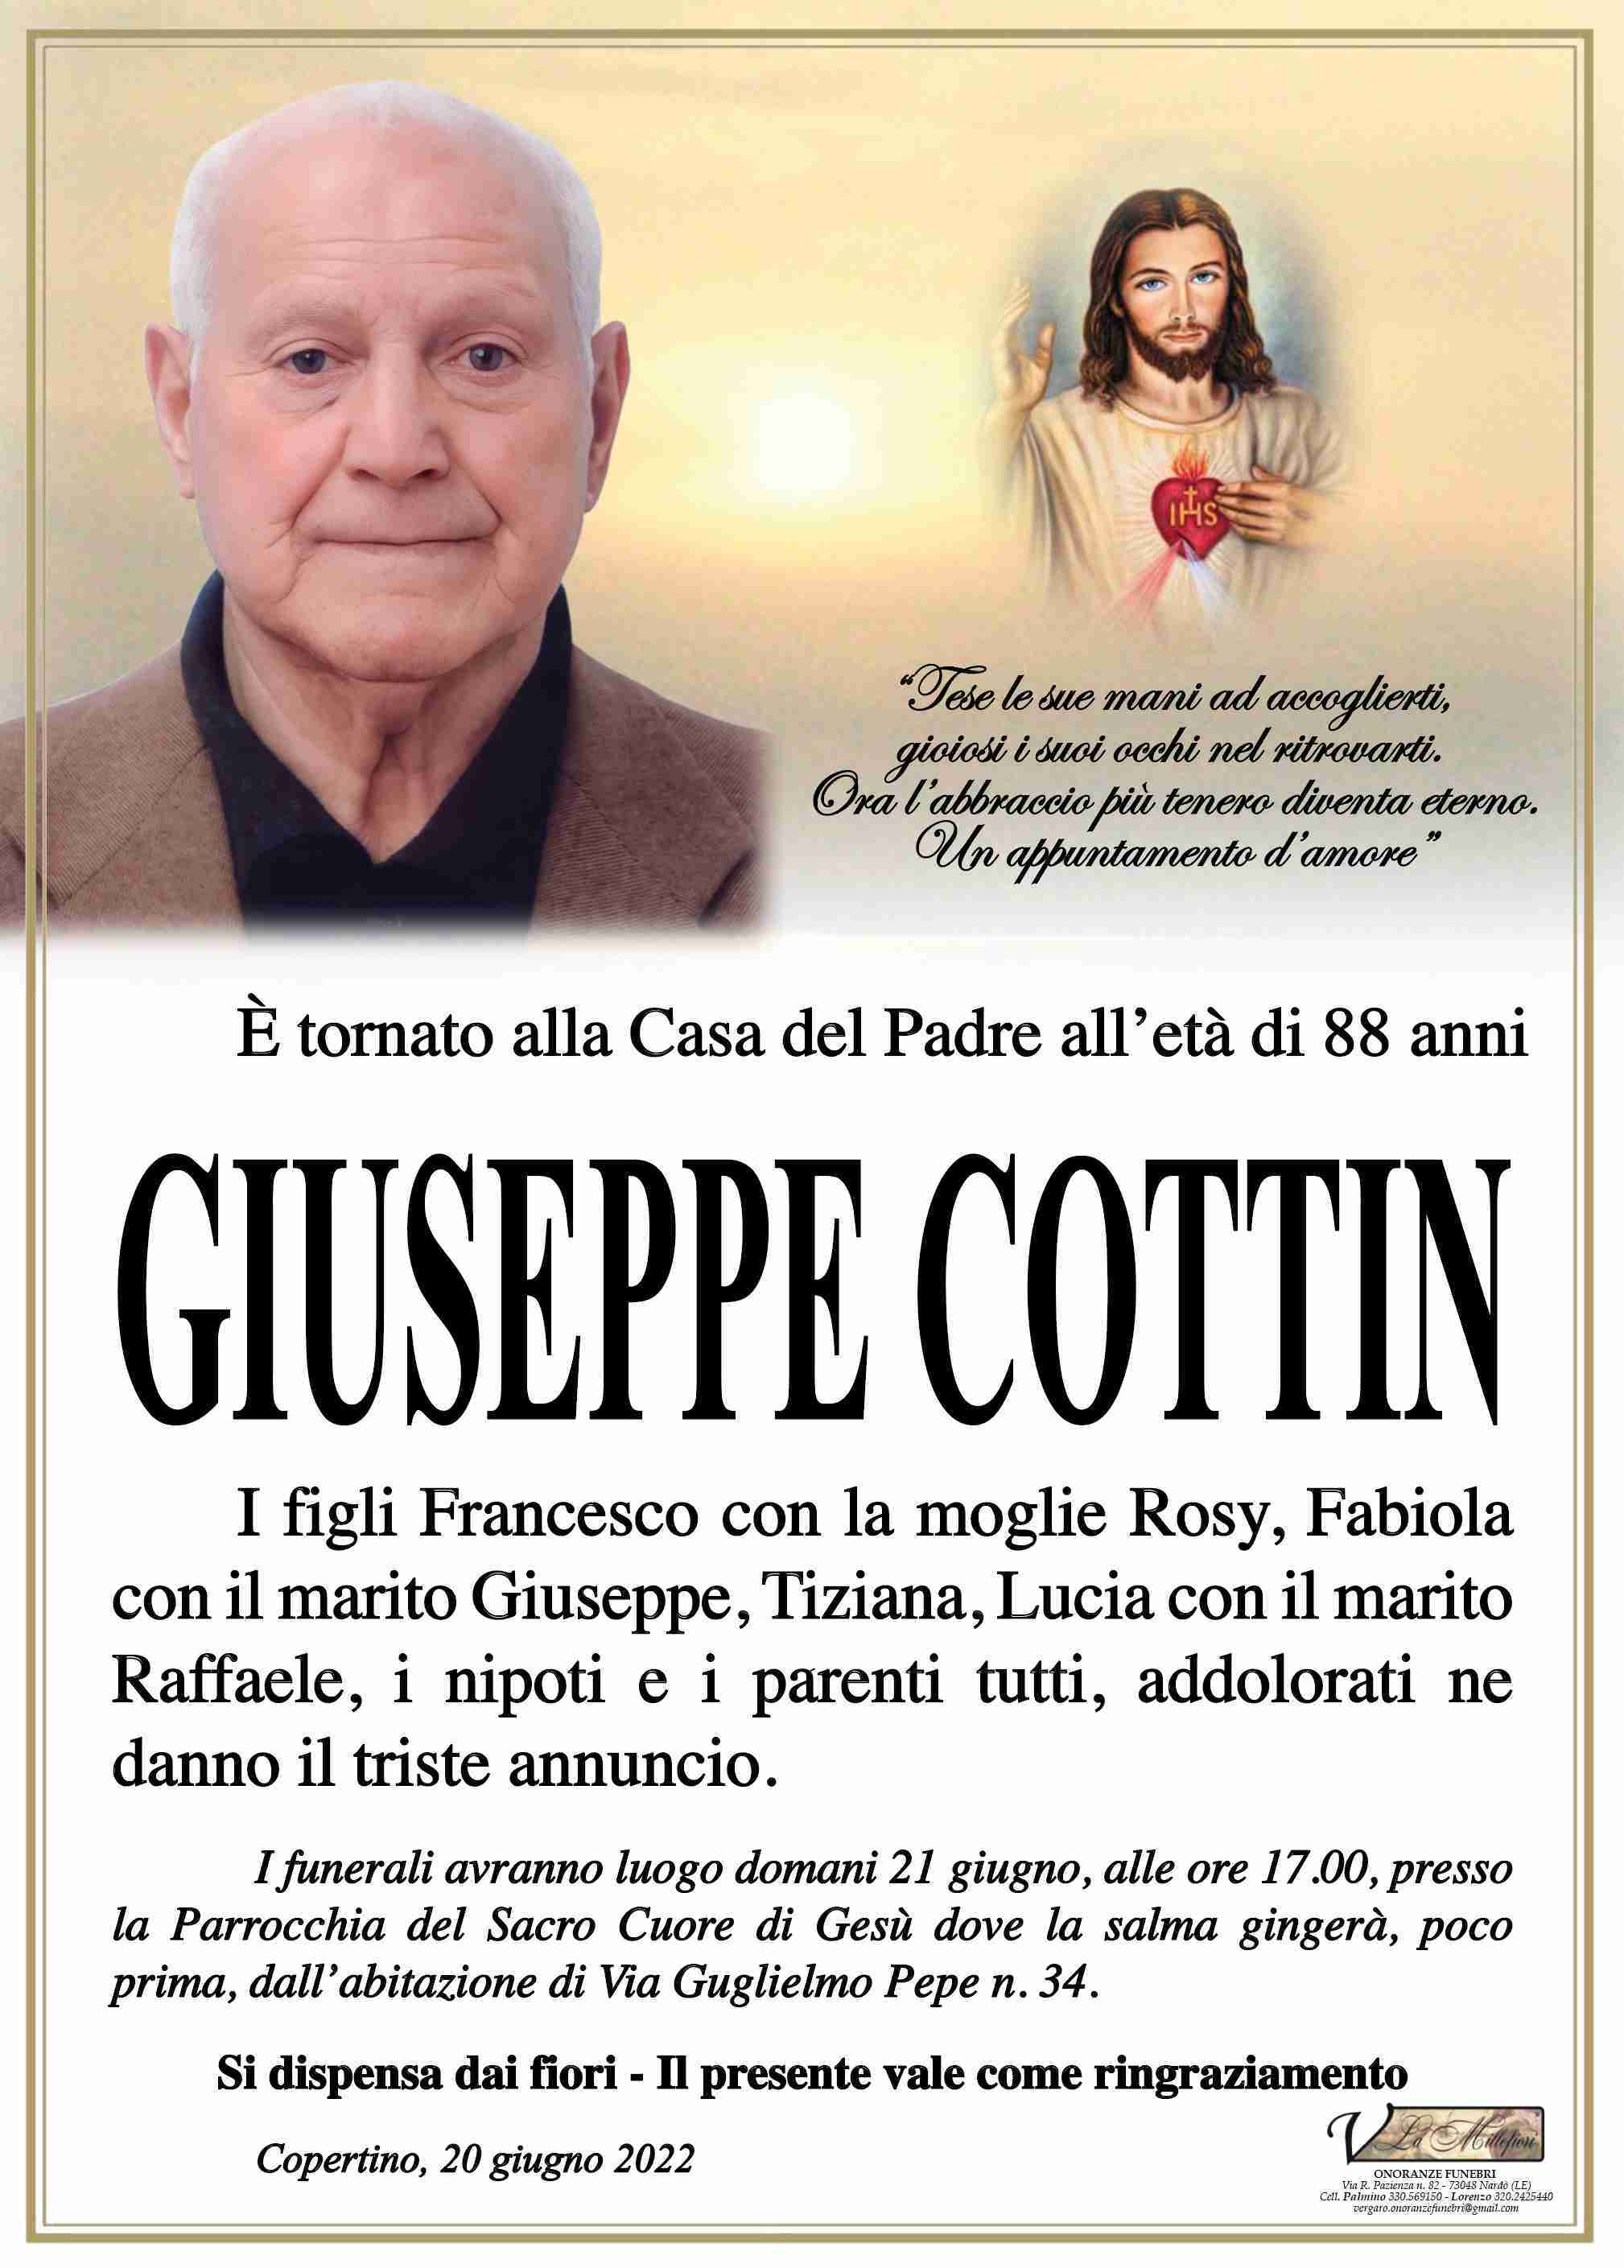 Giuseppe Cottin